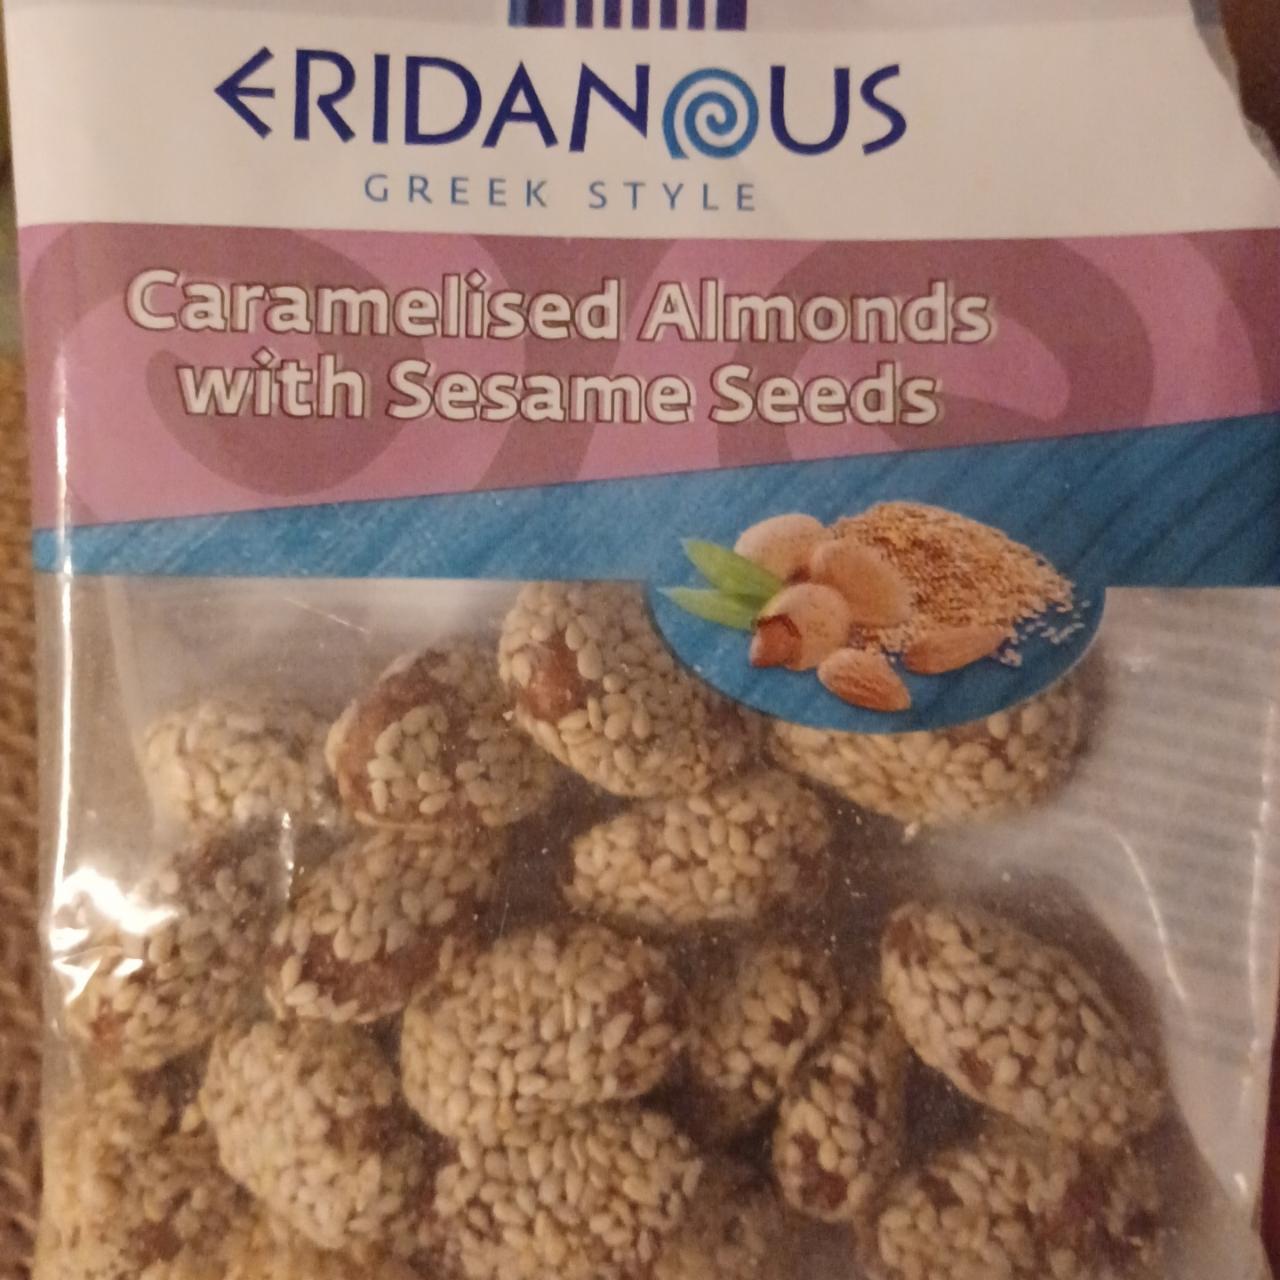 Fotografie - Eridanous caramelized almonds with sesami seeds